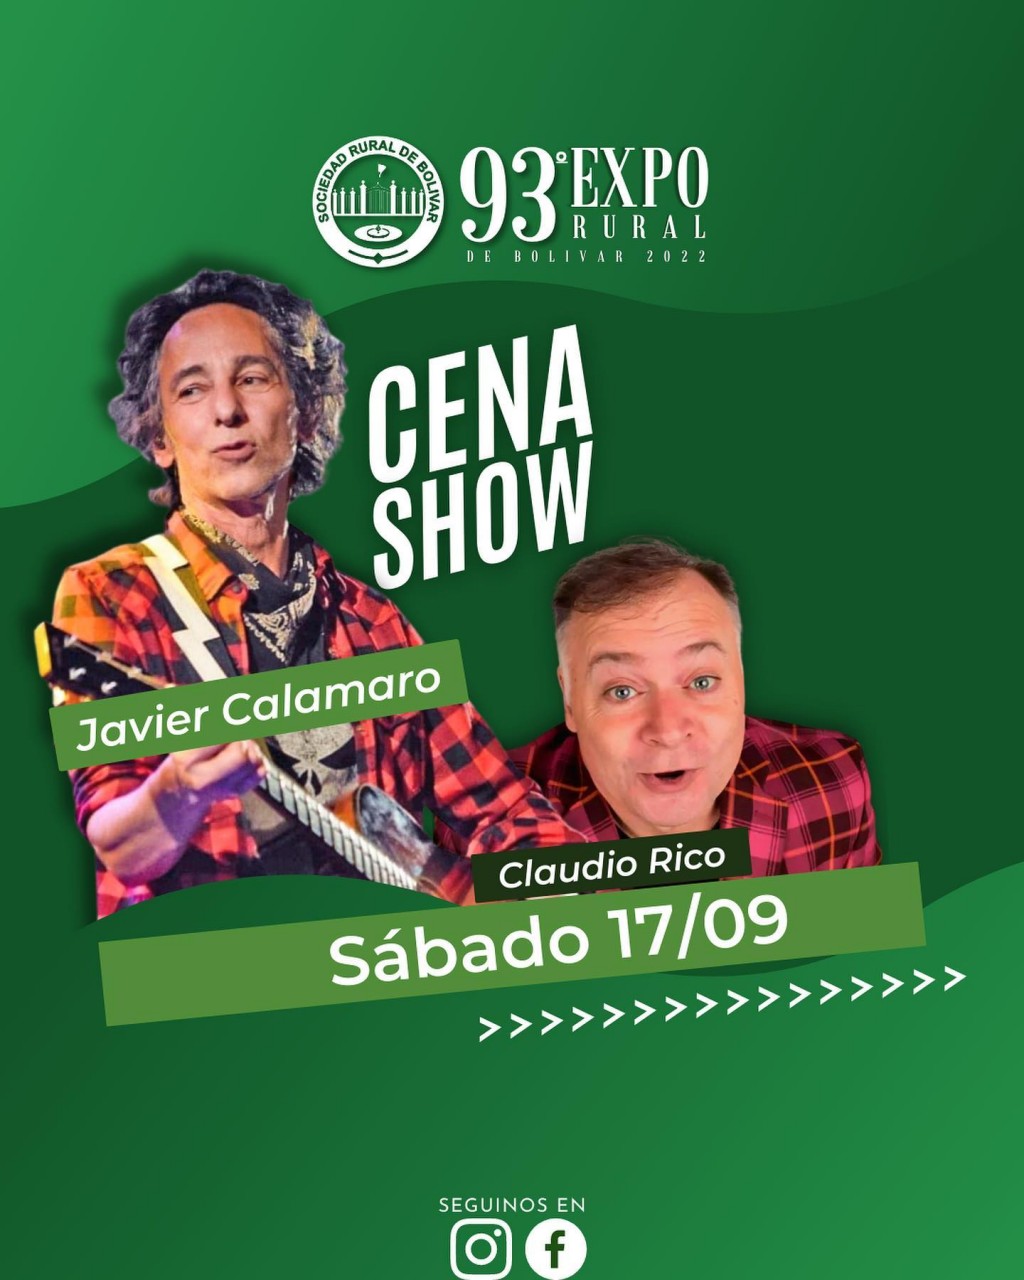 Expo Bolívar 2022: Hoy es la gran cena show, y vos no vas a querer faltar a la cita